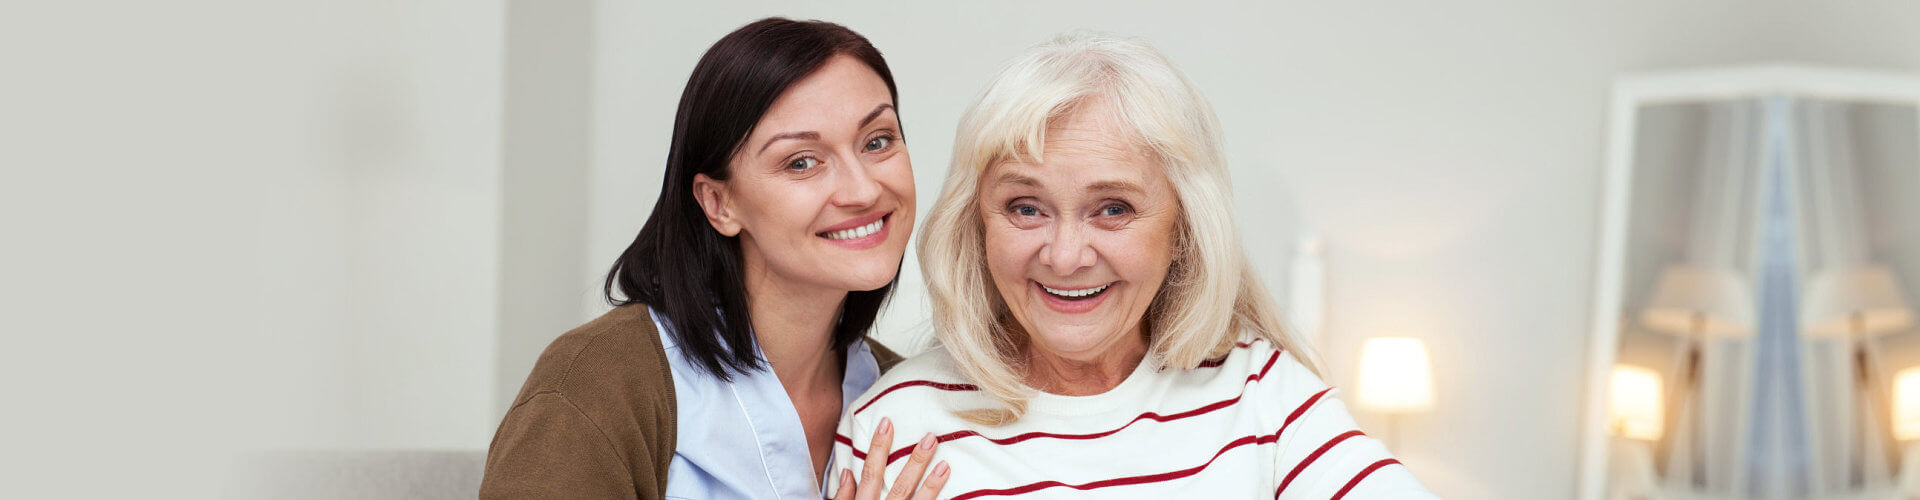 woman and senior smiling upclose